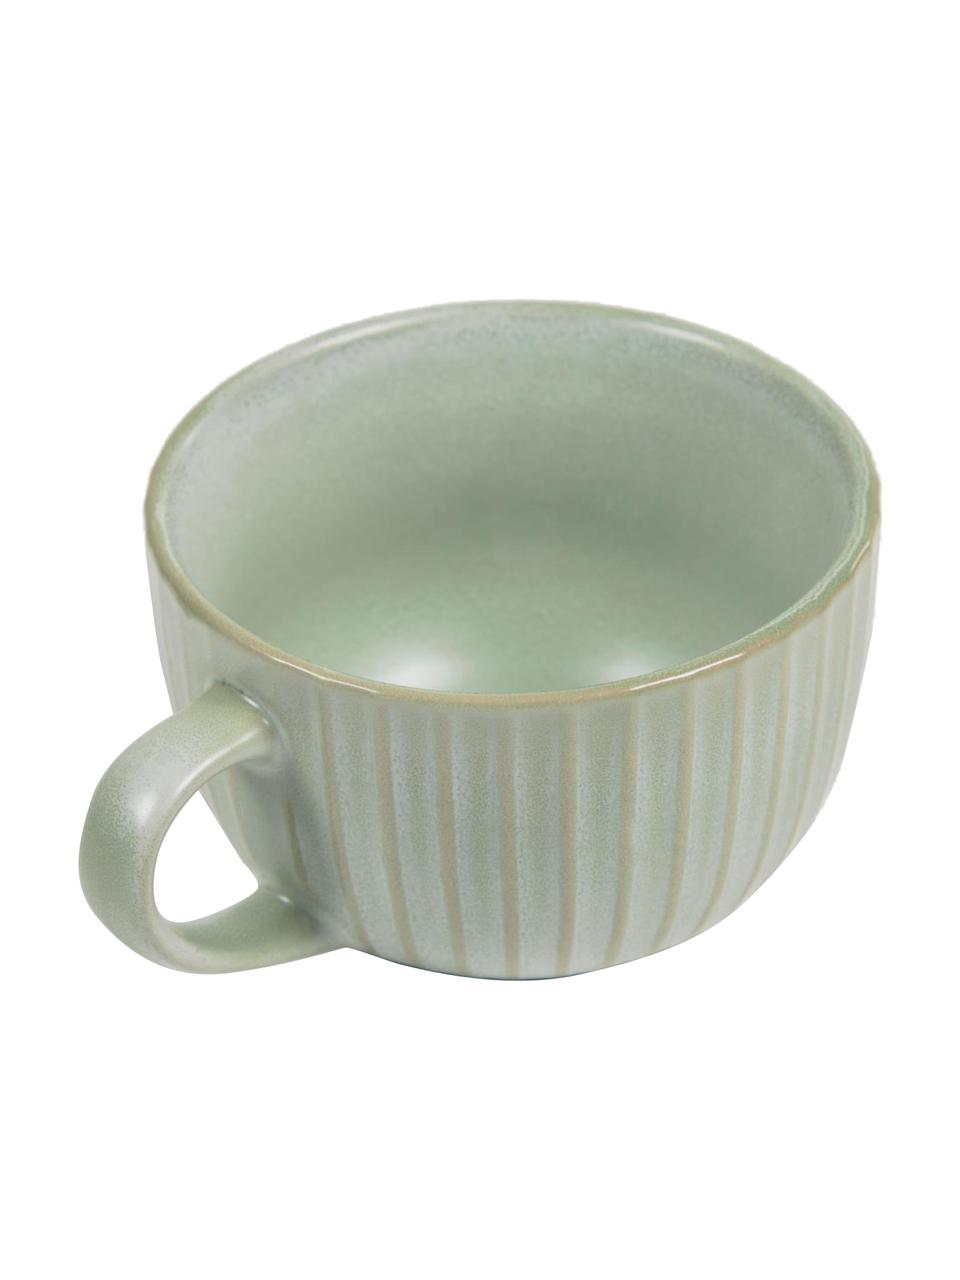 Tazze in ceramica rigata color verde chiaro Itziar 2 pz, Ceramica, Verde chiaro, Ø 12 x Alt. 8 cm, 500 ml